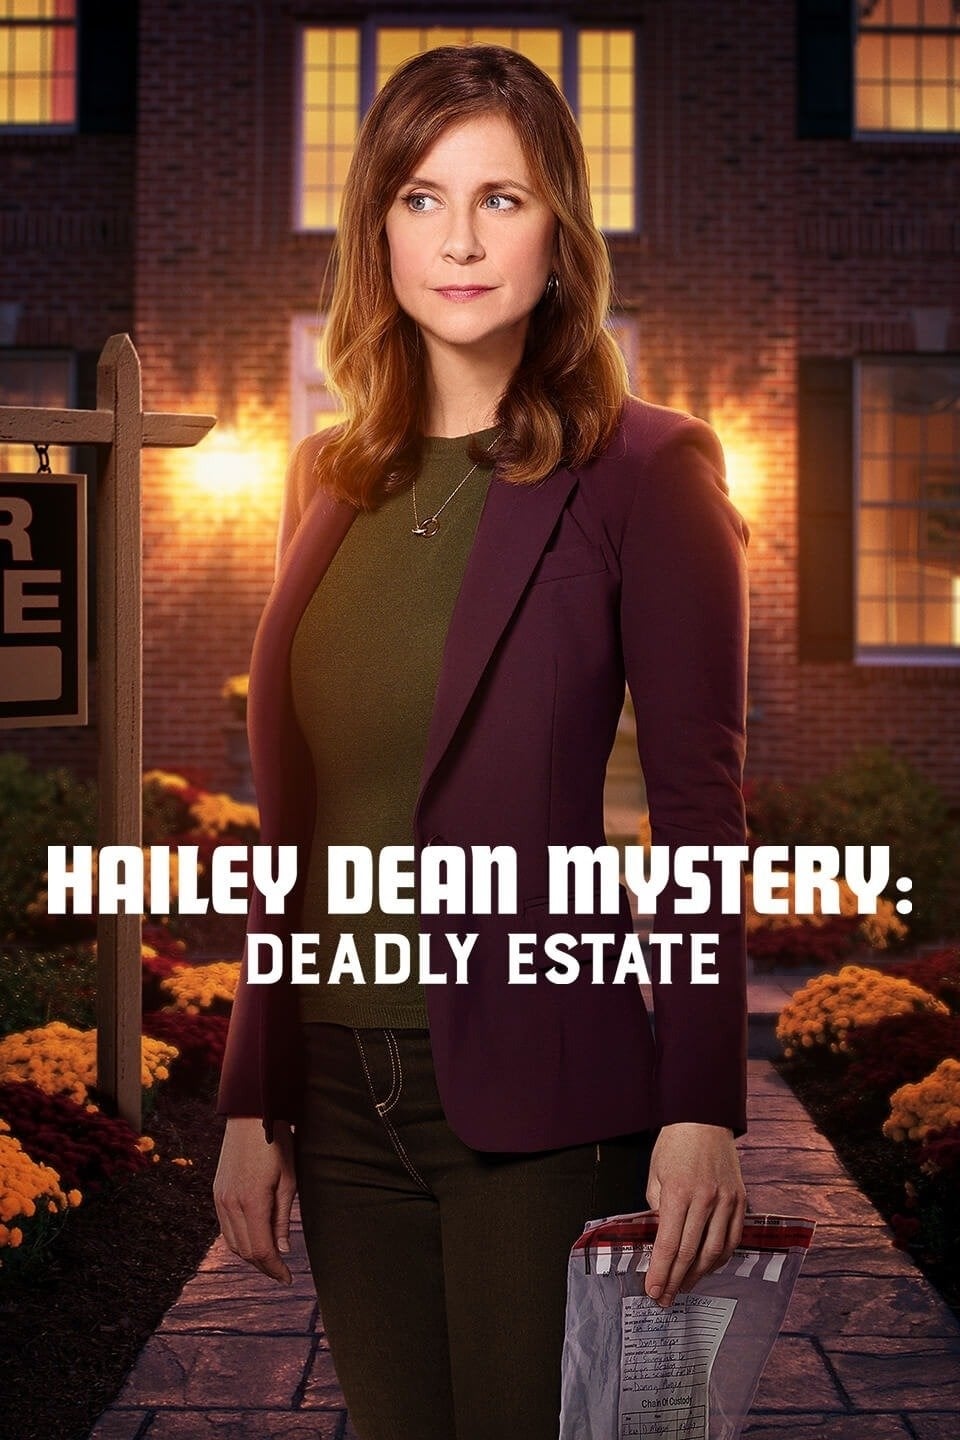 Hailey Dean Mysteries: Deadly Estate (2017)